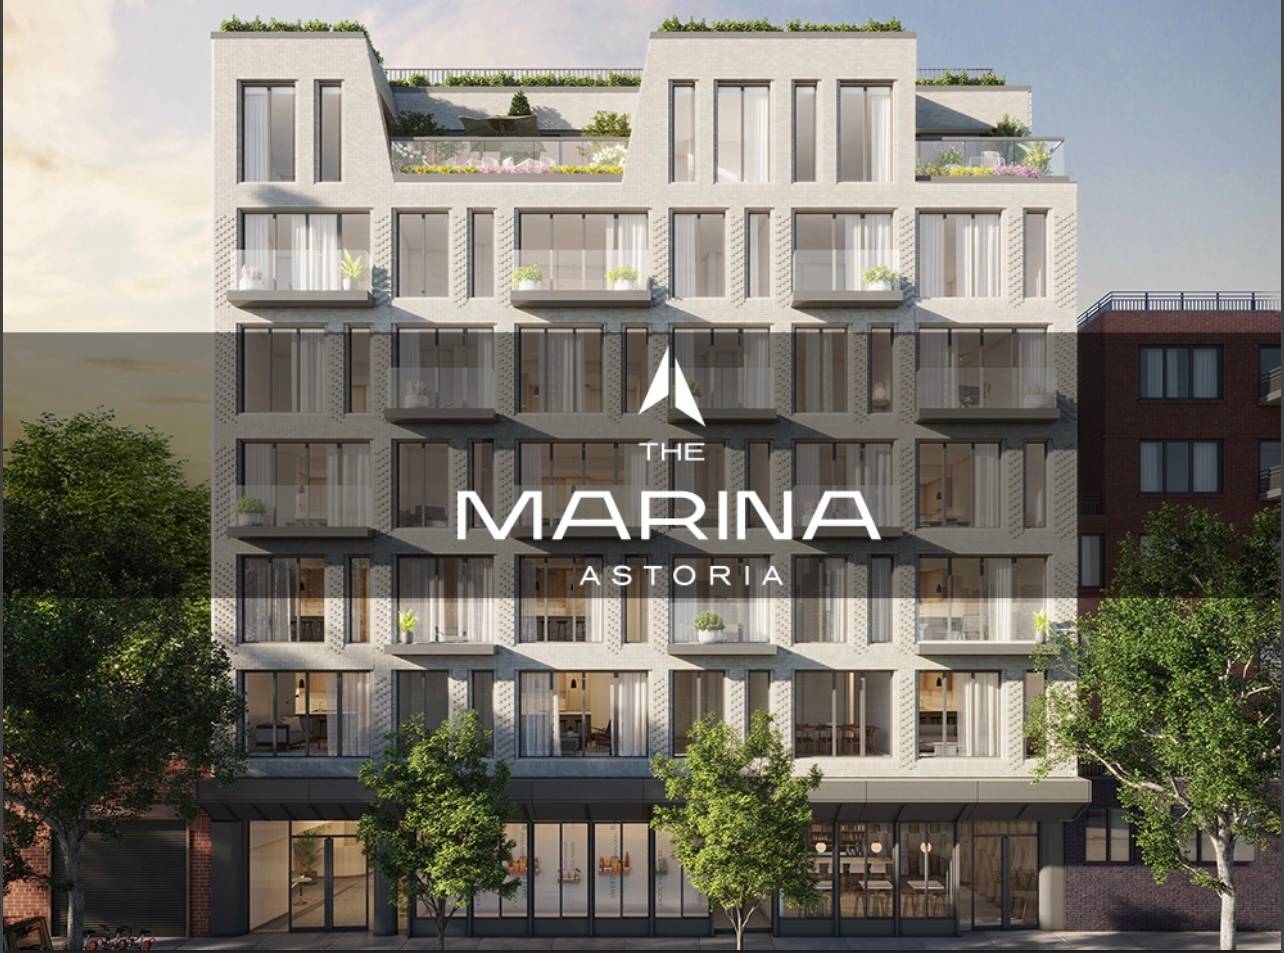 The Marina Astoria